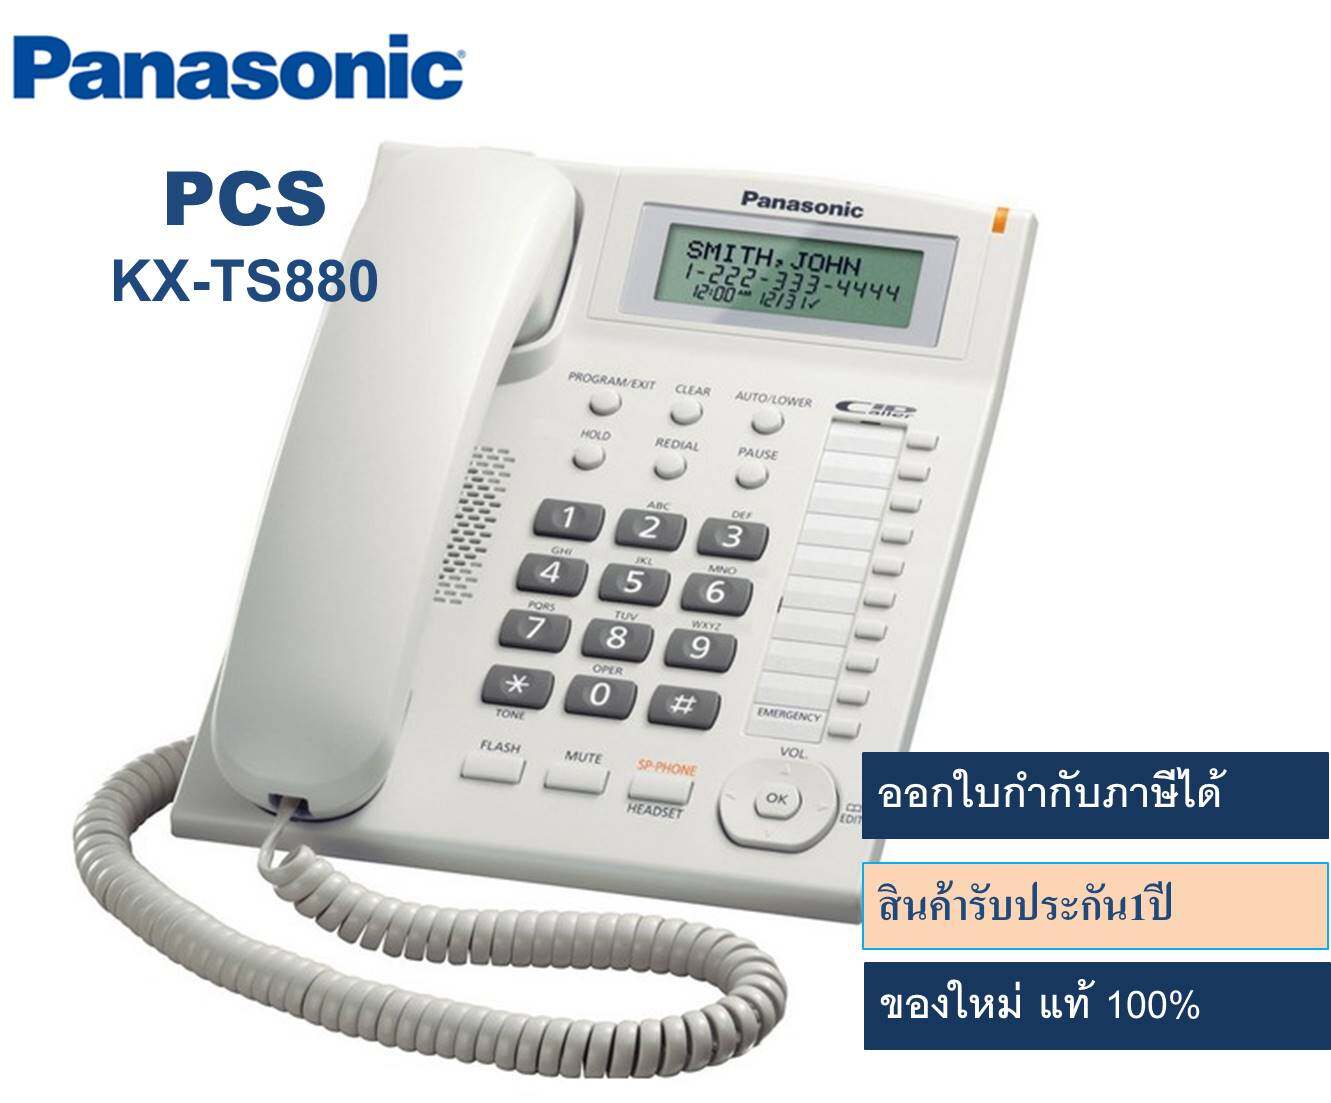 Panasonic TS880 เครื่องโทรศัพท์ รุ่น KX-TS880 โทรศัพท์สีขาว มี Speaker phone (ไม่ต้องยกหูก็โทรออก-รับสายได้เลย) สามารถโชว์เบอร์ เปลี่ยนเสียงได้